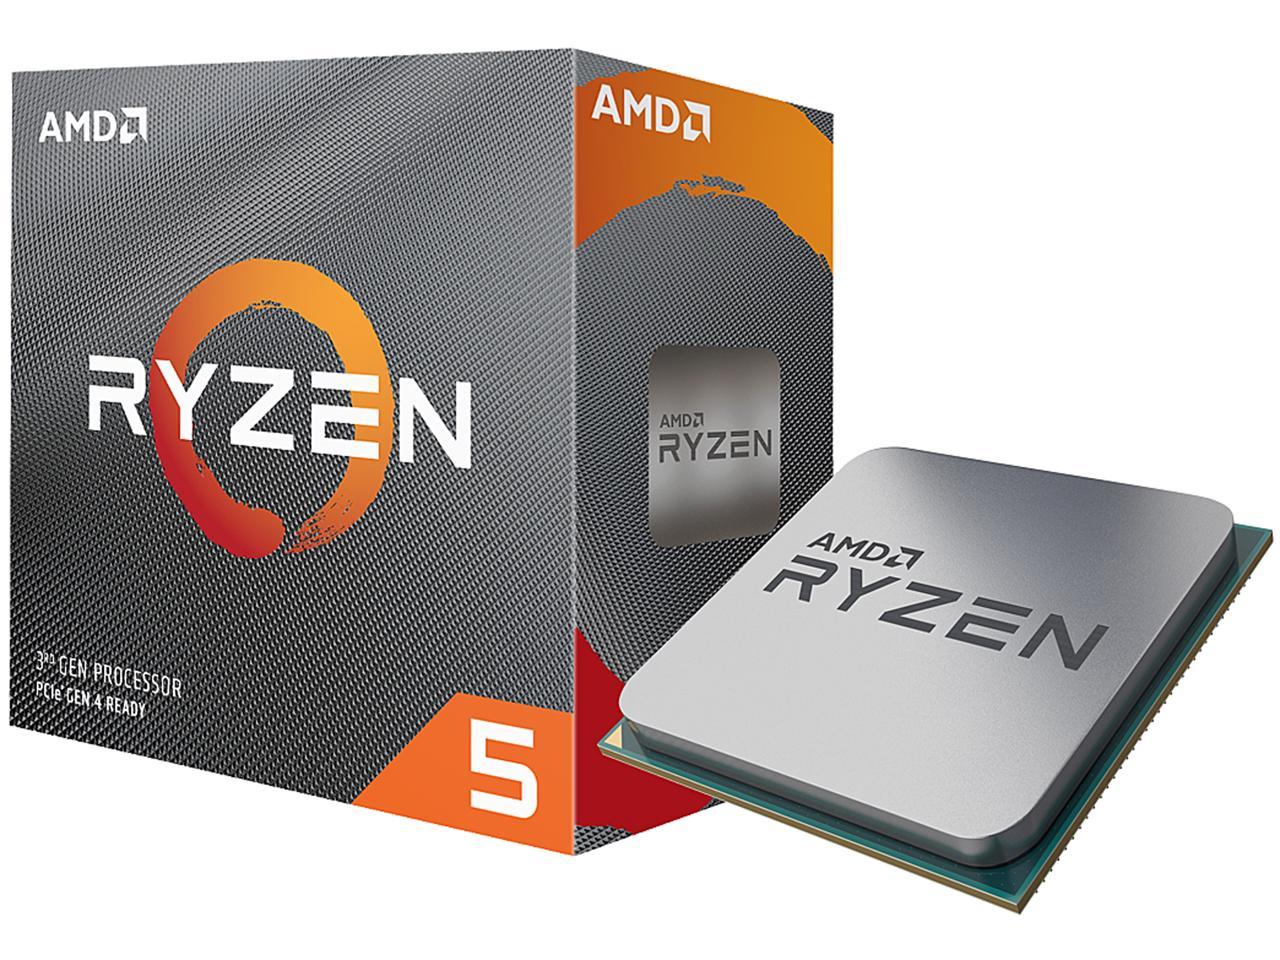 AMD RYZEN 5 3600 7nm SKT AM4 CPU; 6 Core/12 Thread Base Clock 3.6GHz, Max Boost Clock 4.2GHz